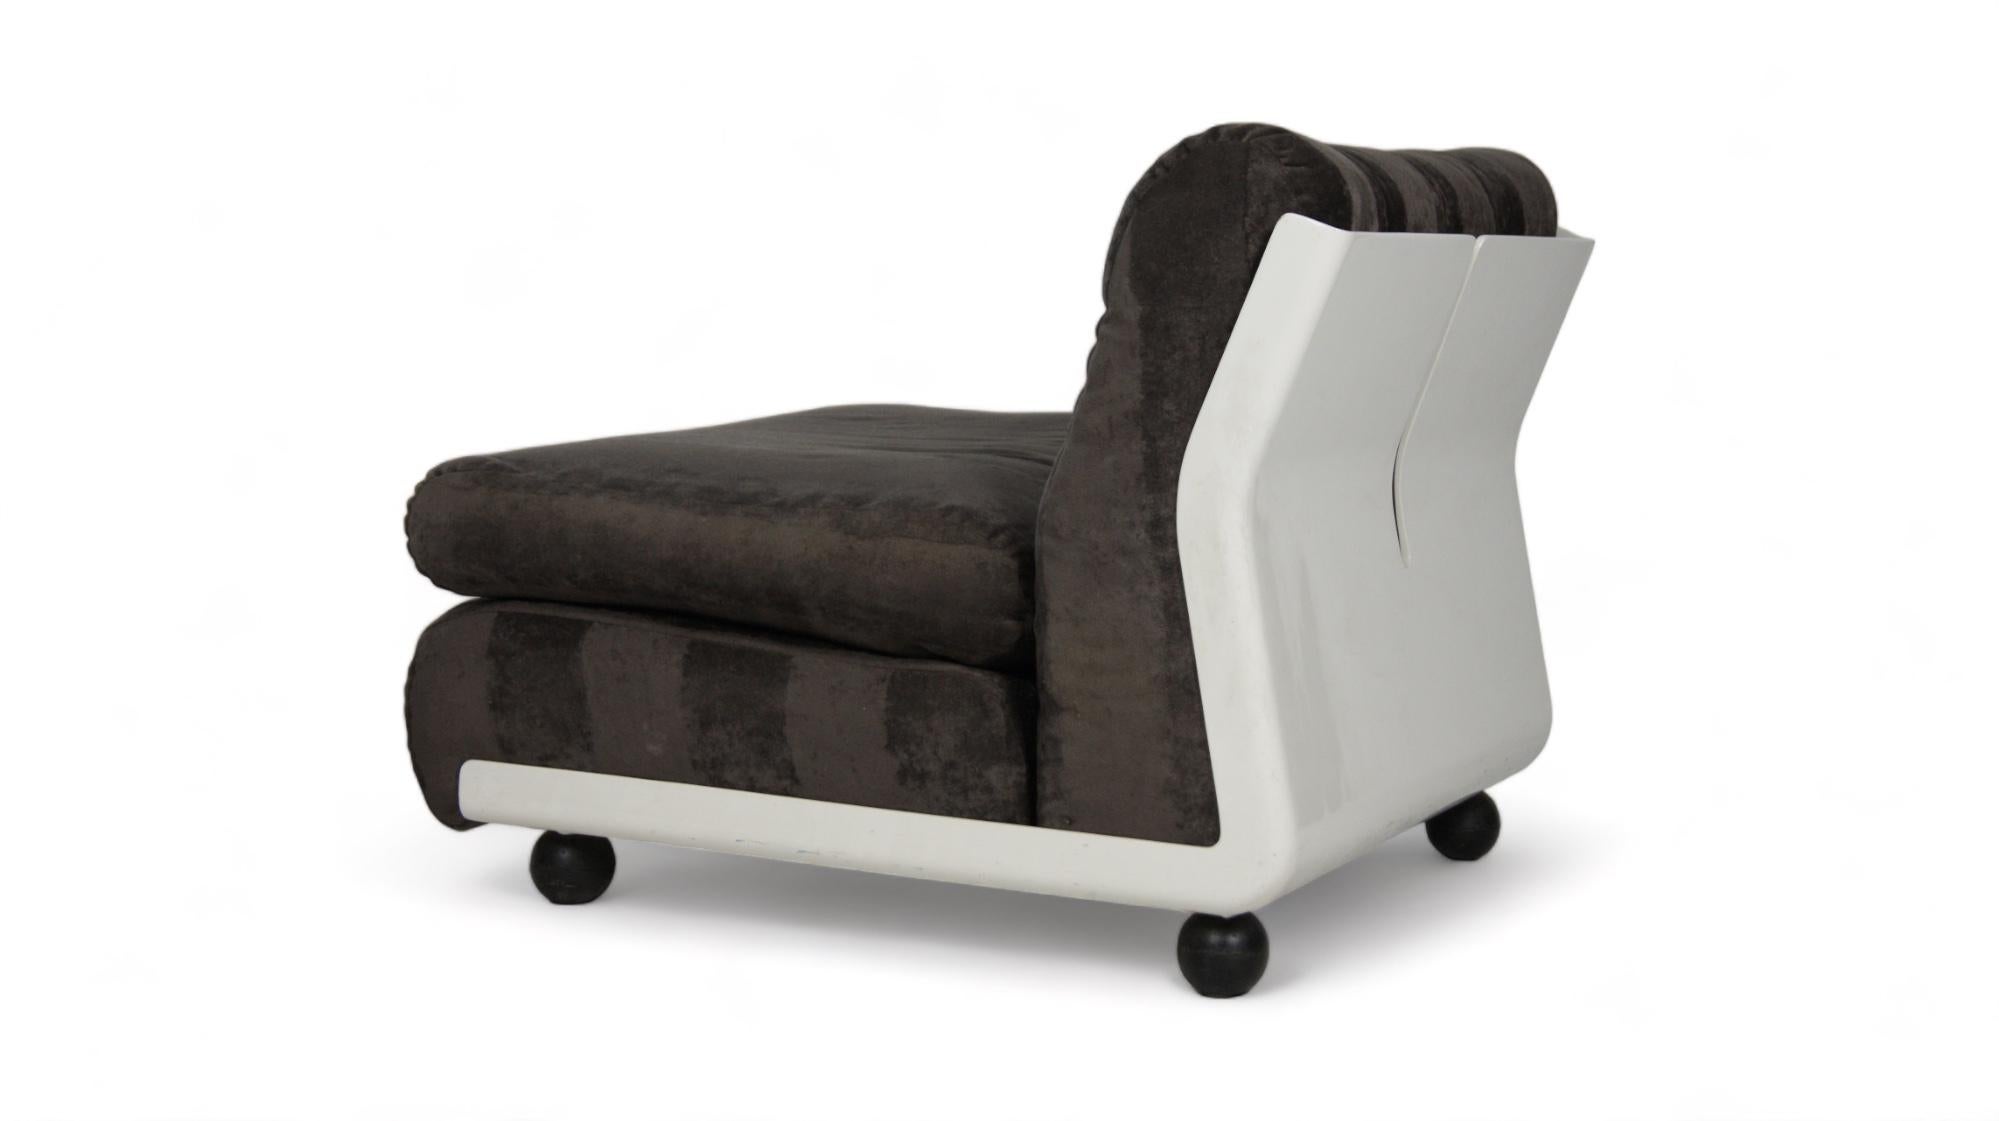 B&B Italia Mario Bellini Amanta Italian design modular sofa in dark fabric For Sale 4